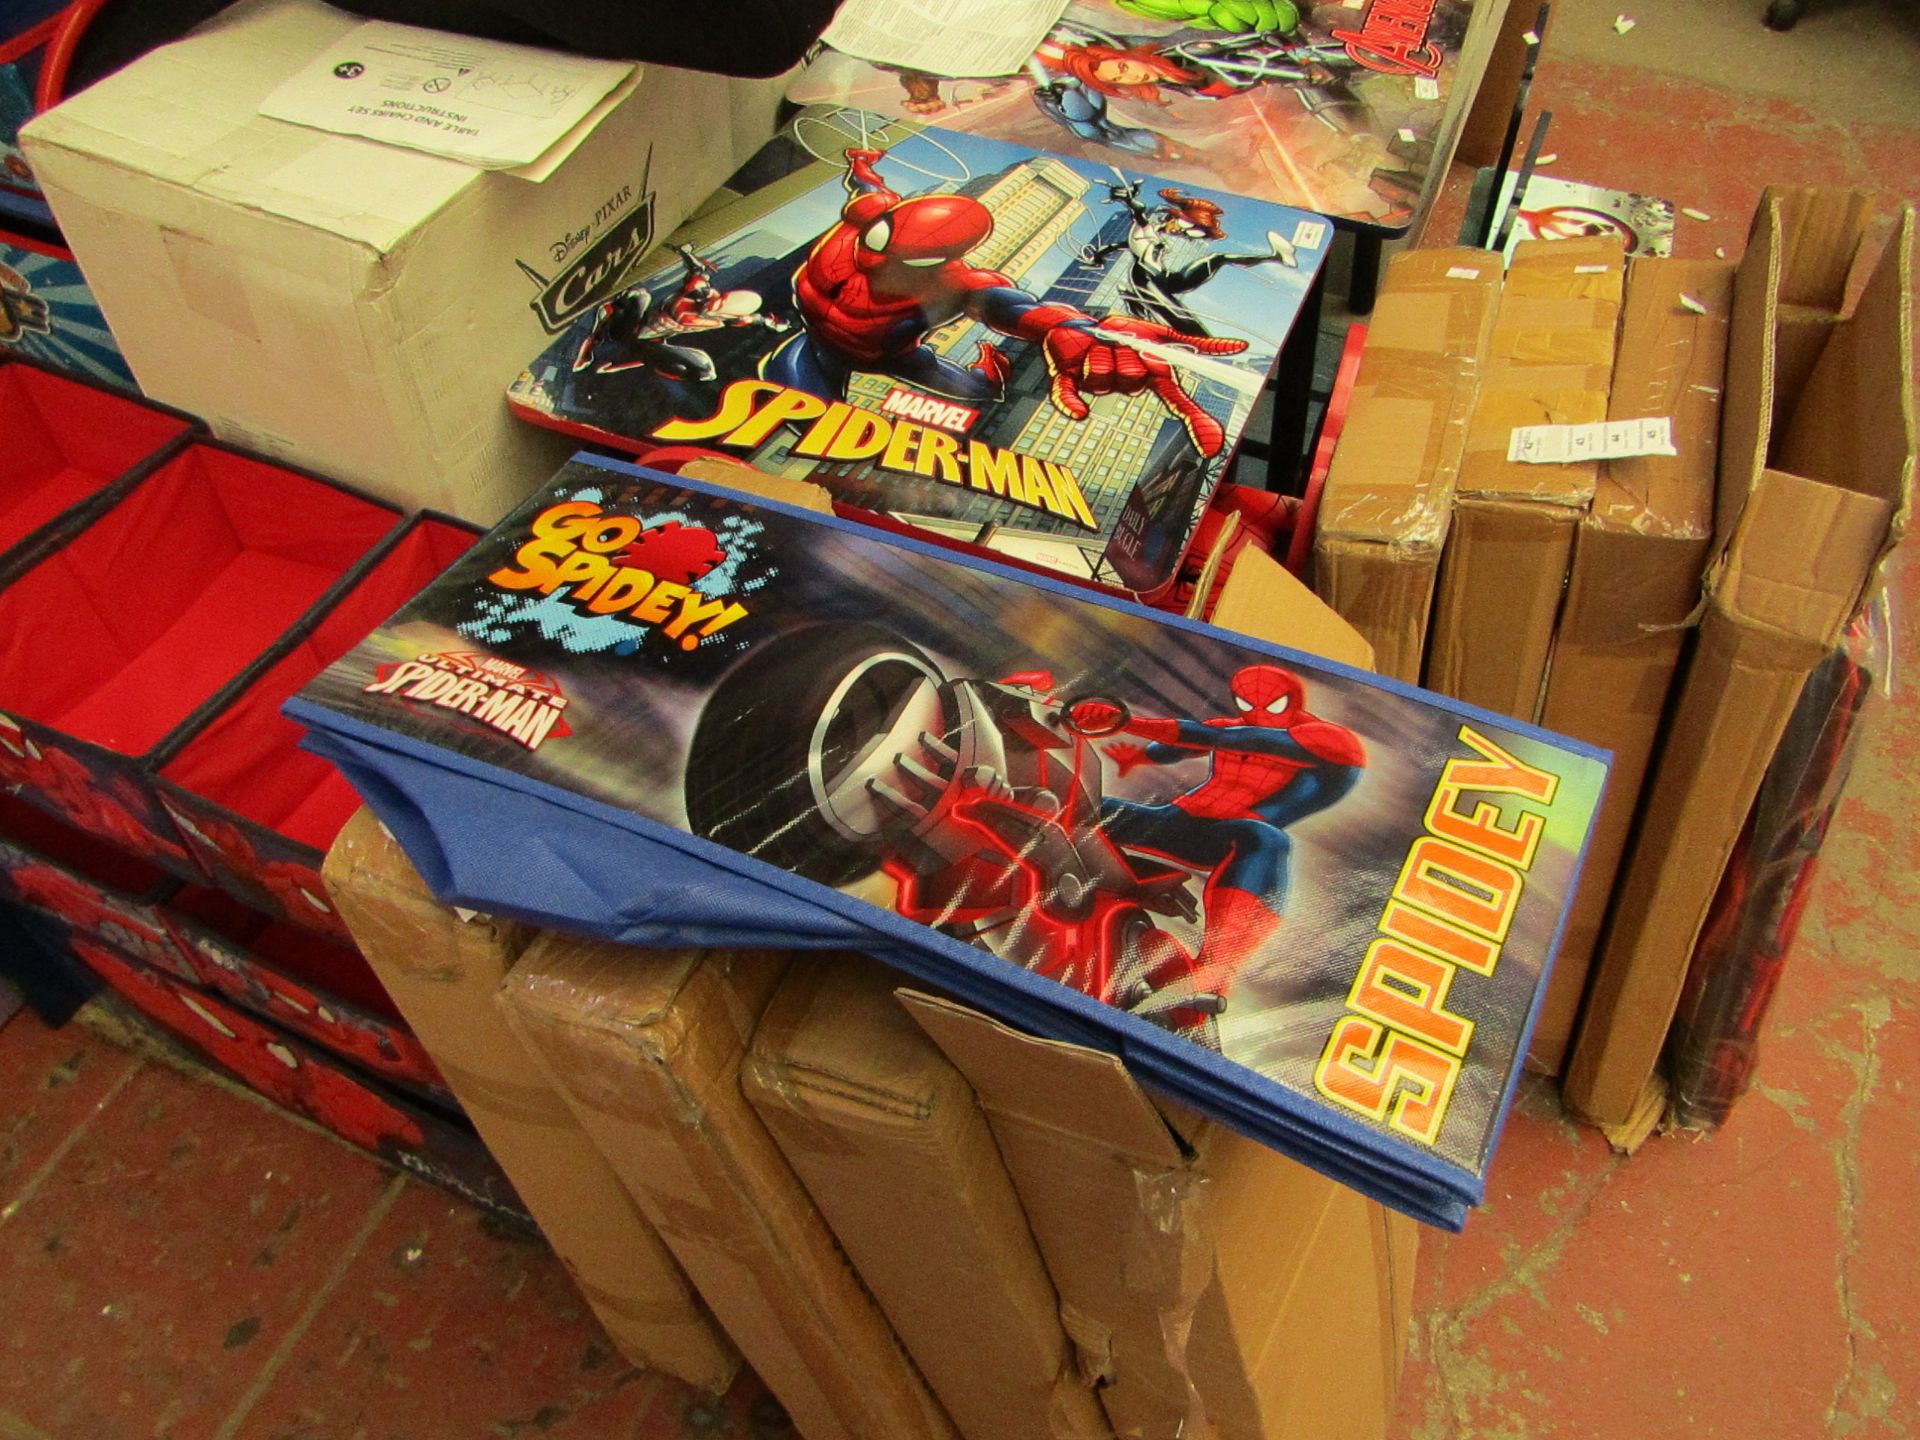 Spider-Man - Wooden Toy Storage Organizer - Box Unchecked but looks Complete.